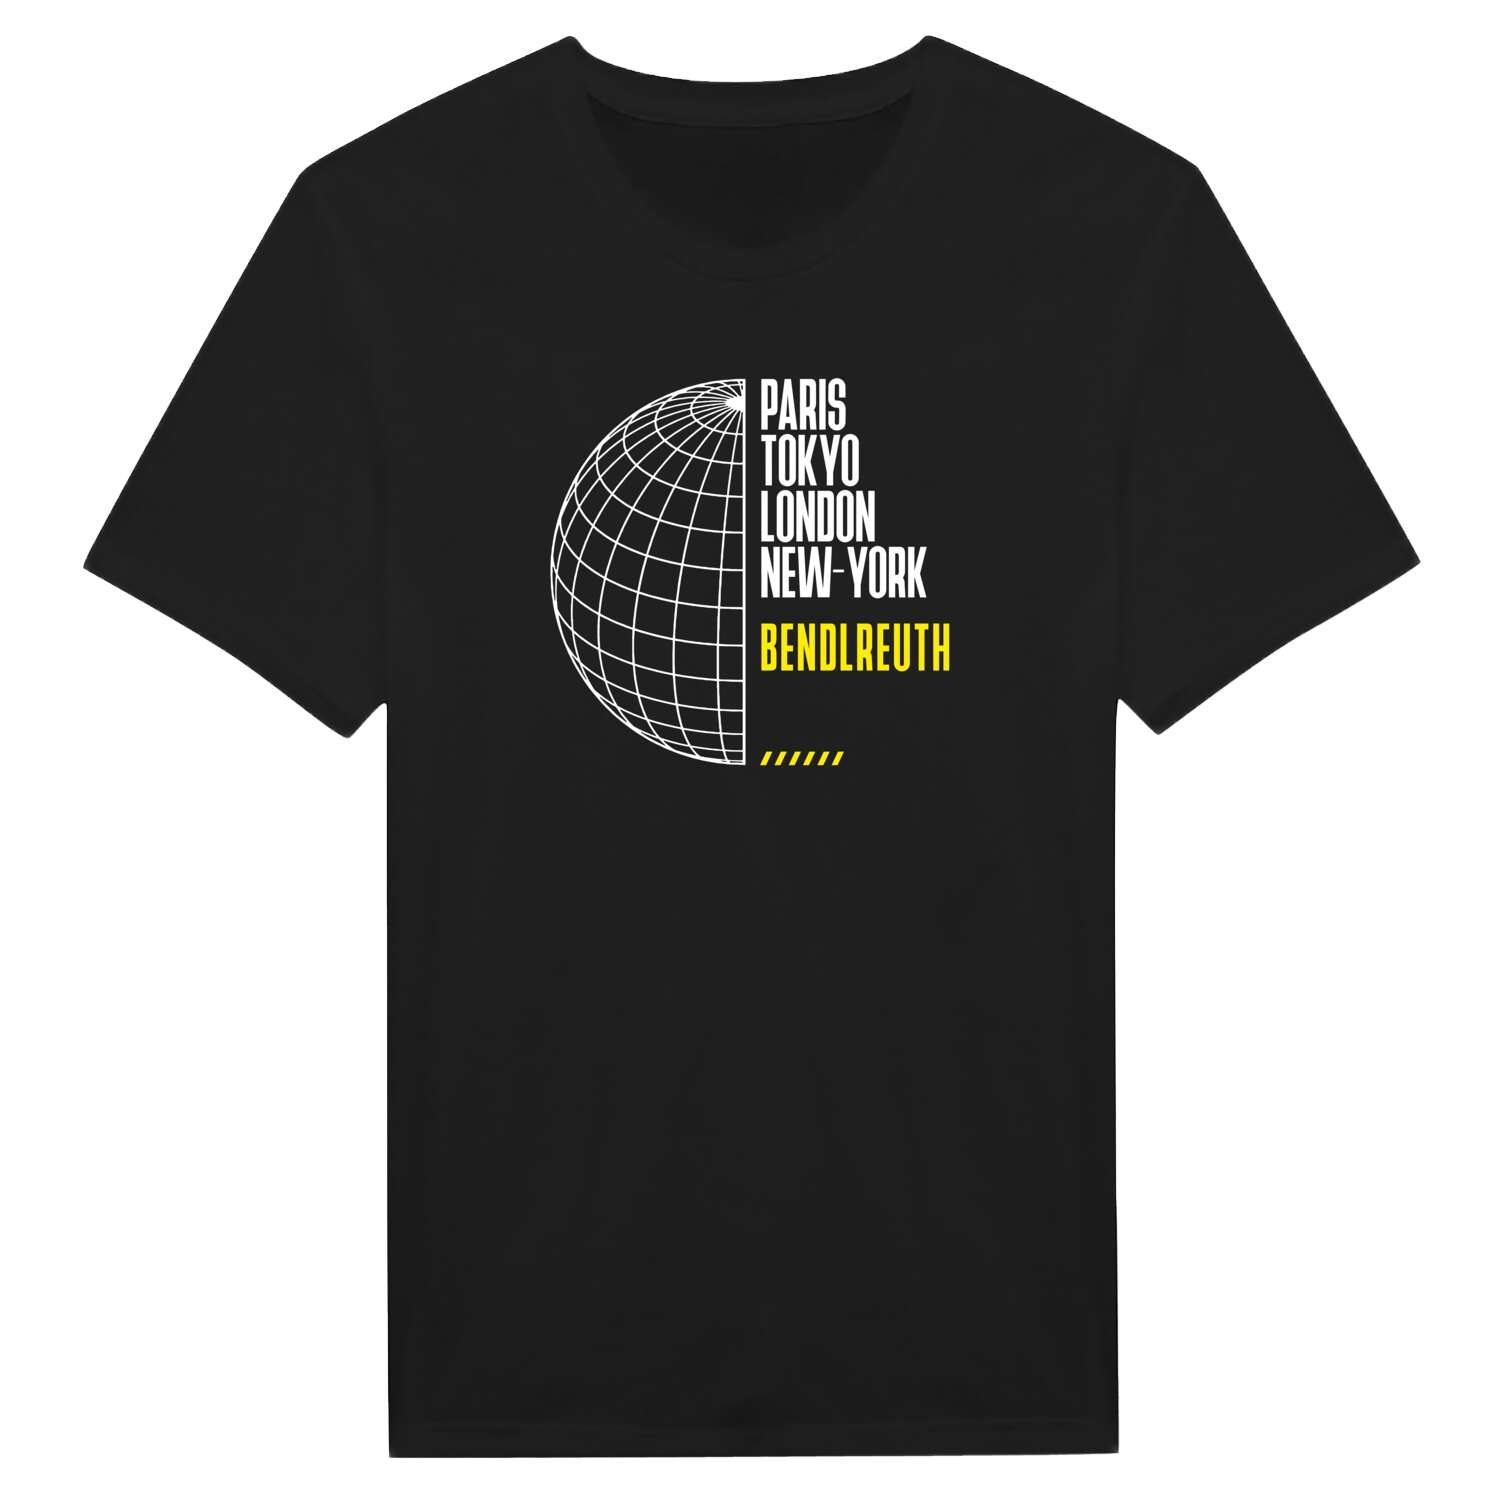 Bendlreuth T-Shirt »Paris Tokyo London«